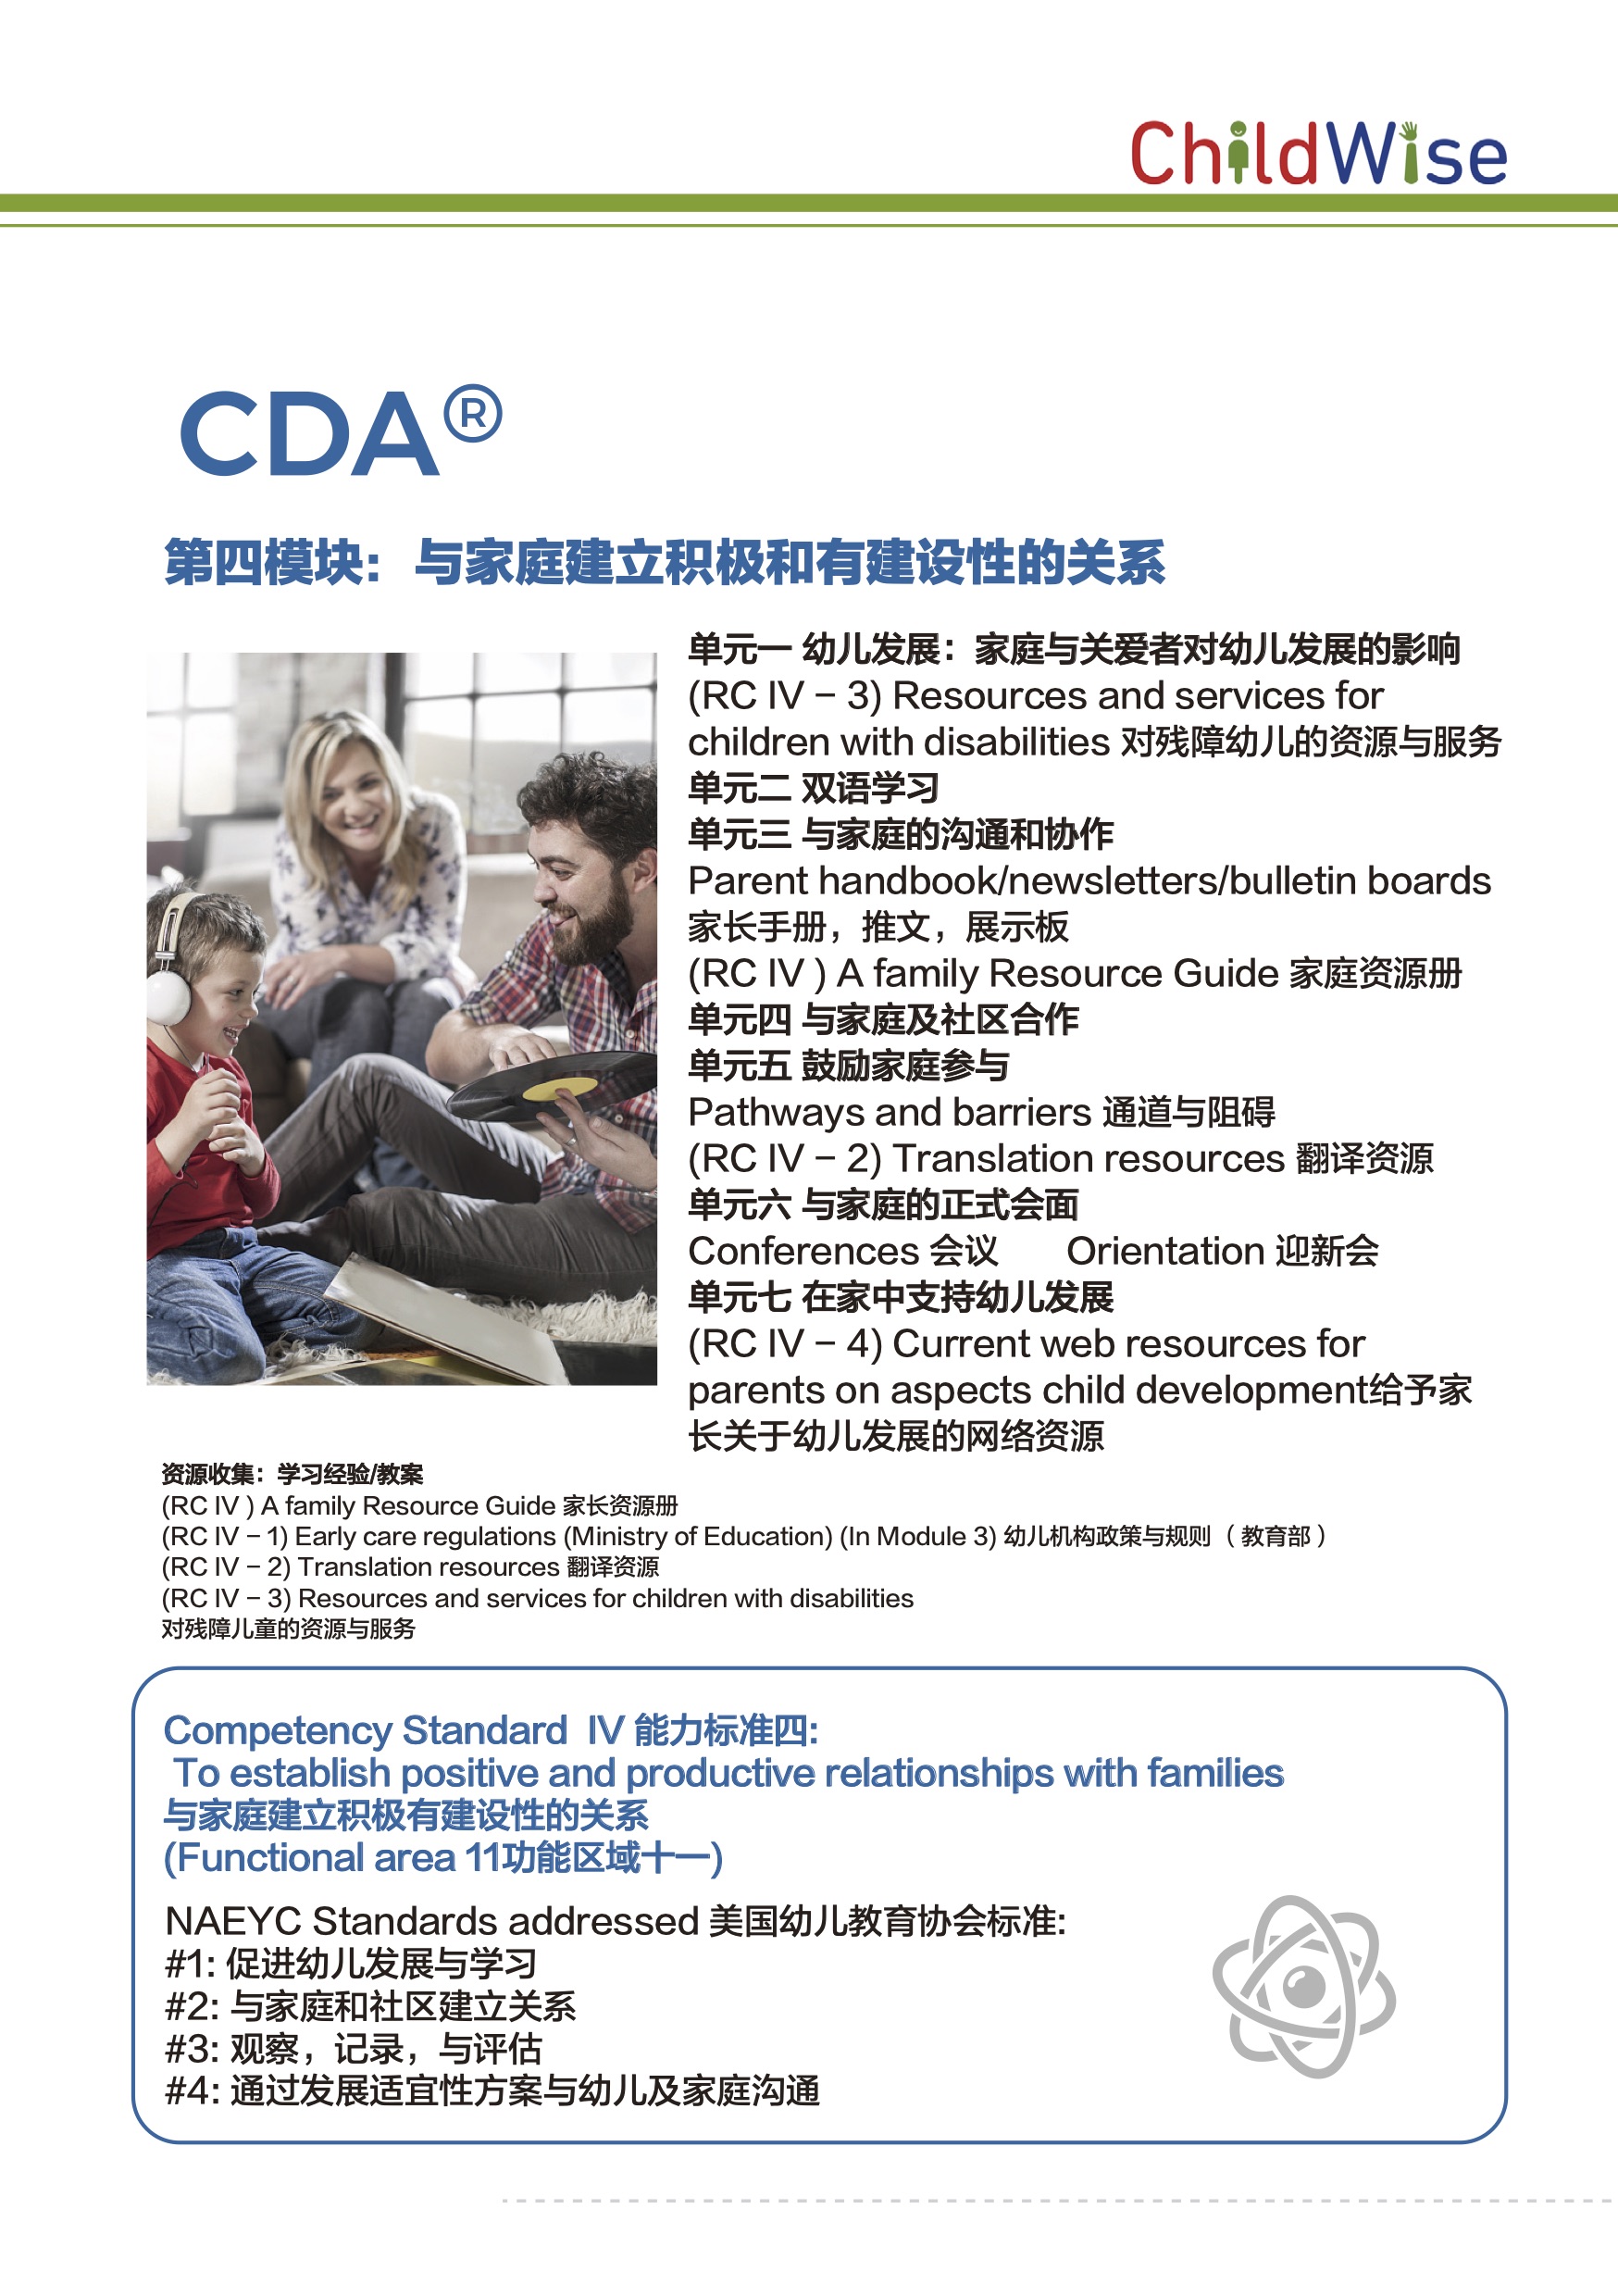 CDA认证课程体系介绍7